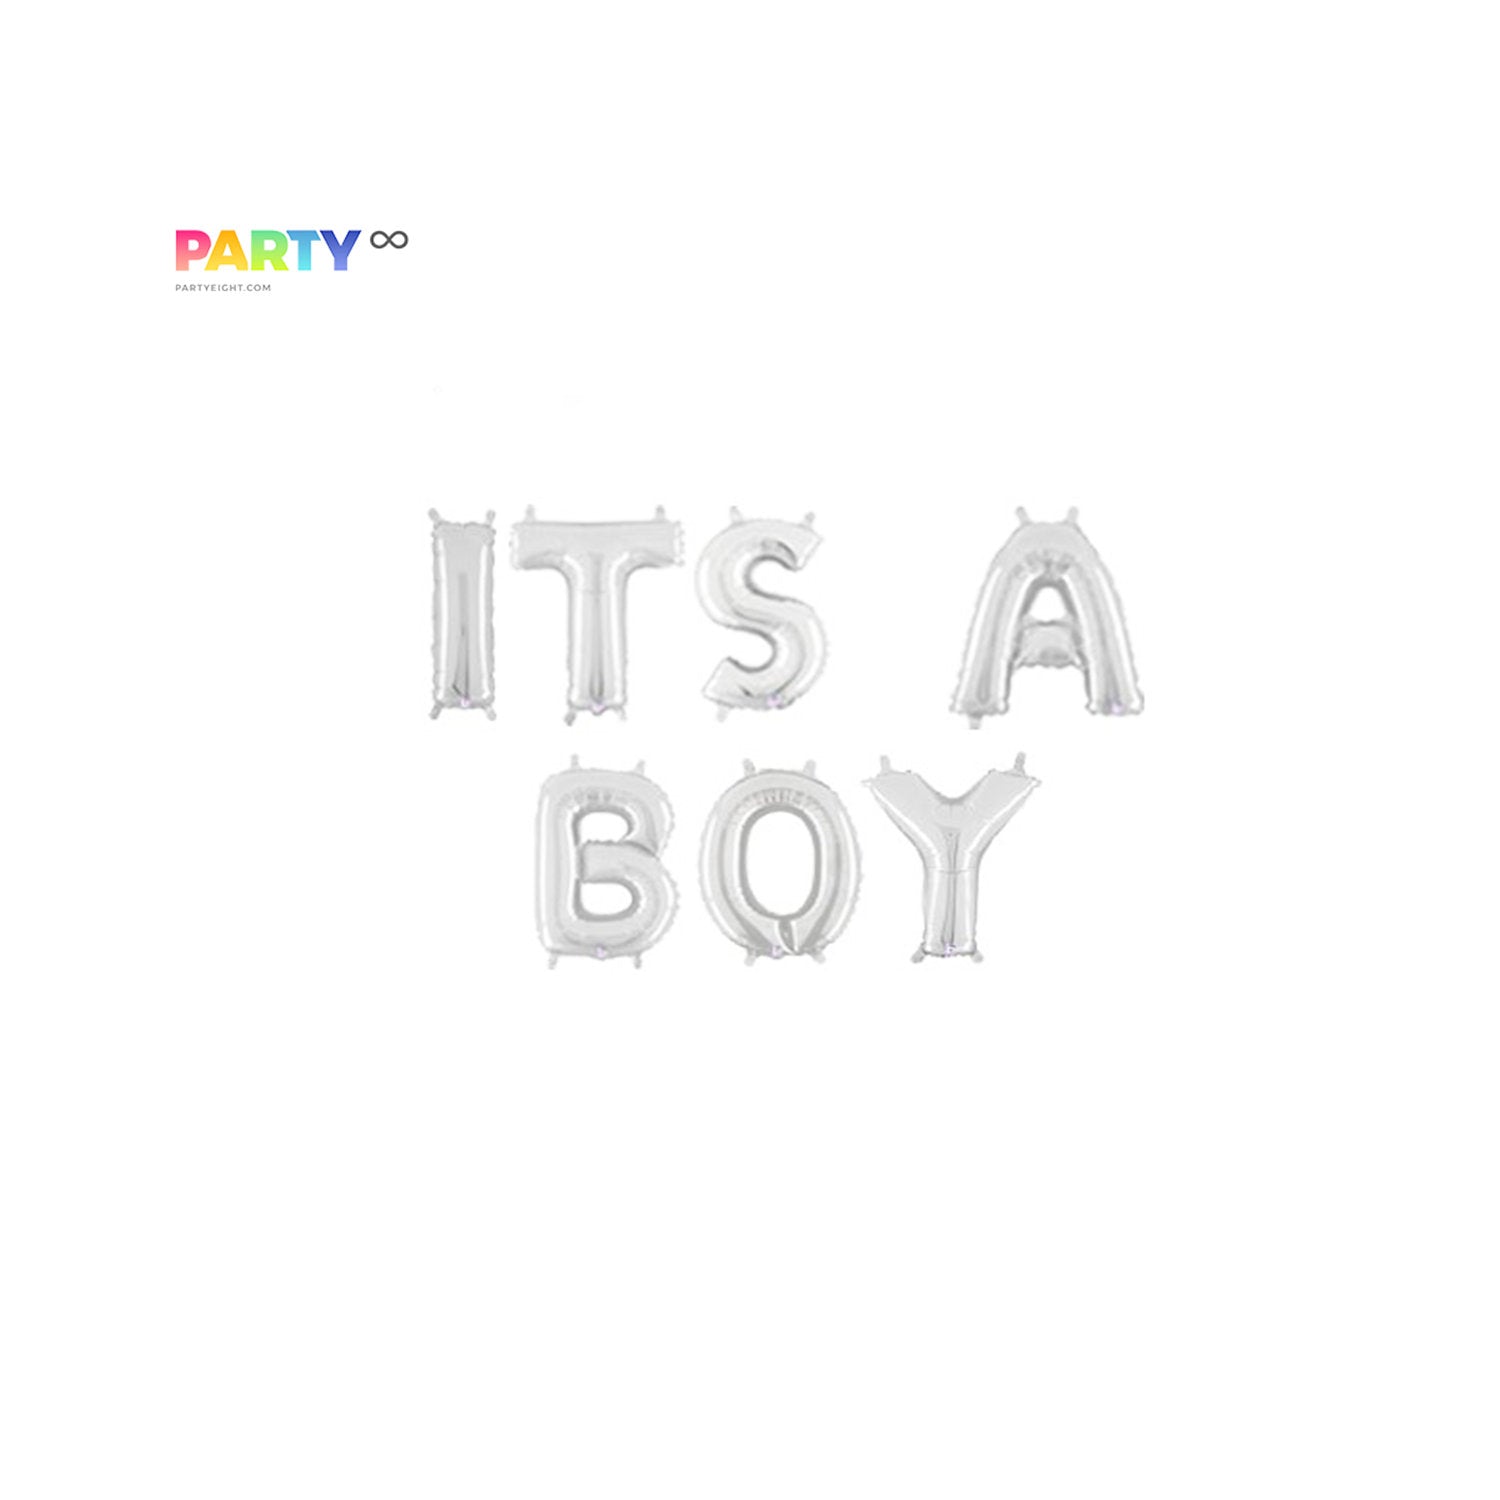 ITS A BOY Gender Reveal Balloon Banner